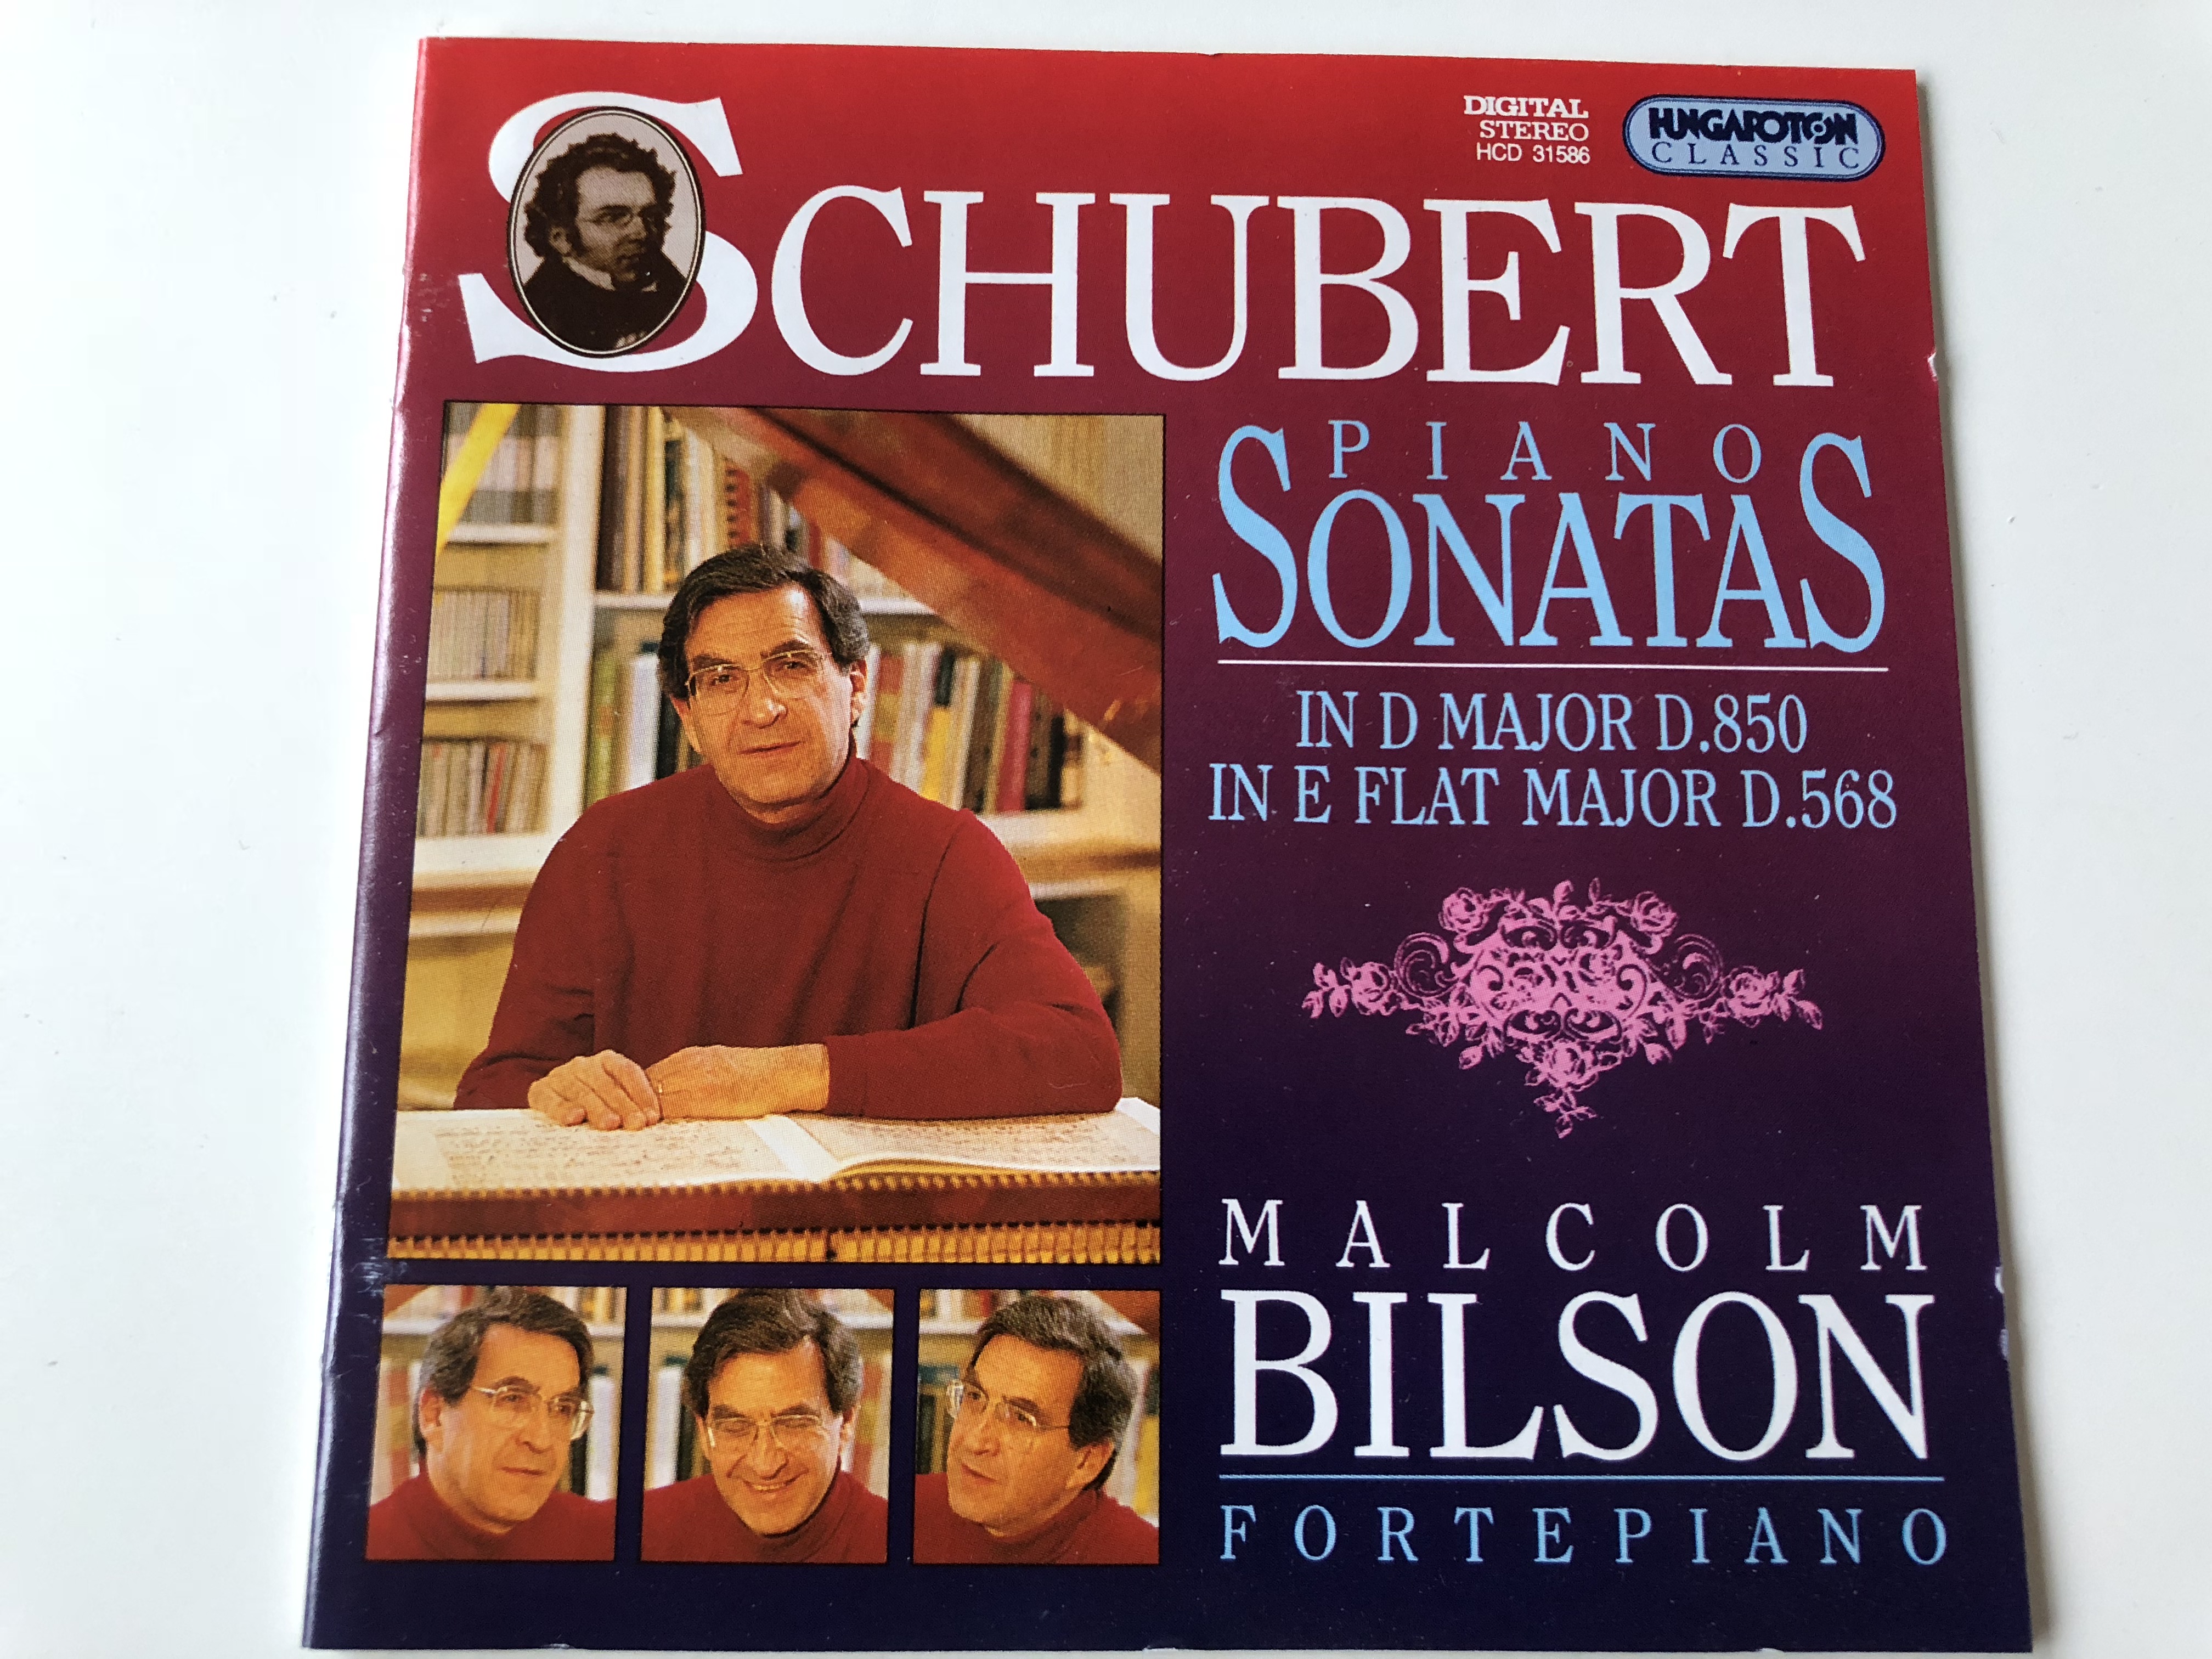 schubert-piano-sonatas-in-d-major-d.850-in-e-flat-major-d.568-malcolm-bilson-fortepiano-hungaroton-classic-audio-cd-1995-hcd-31586-1-.jpg